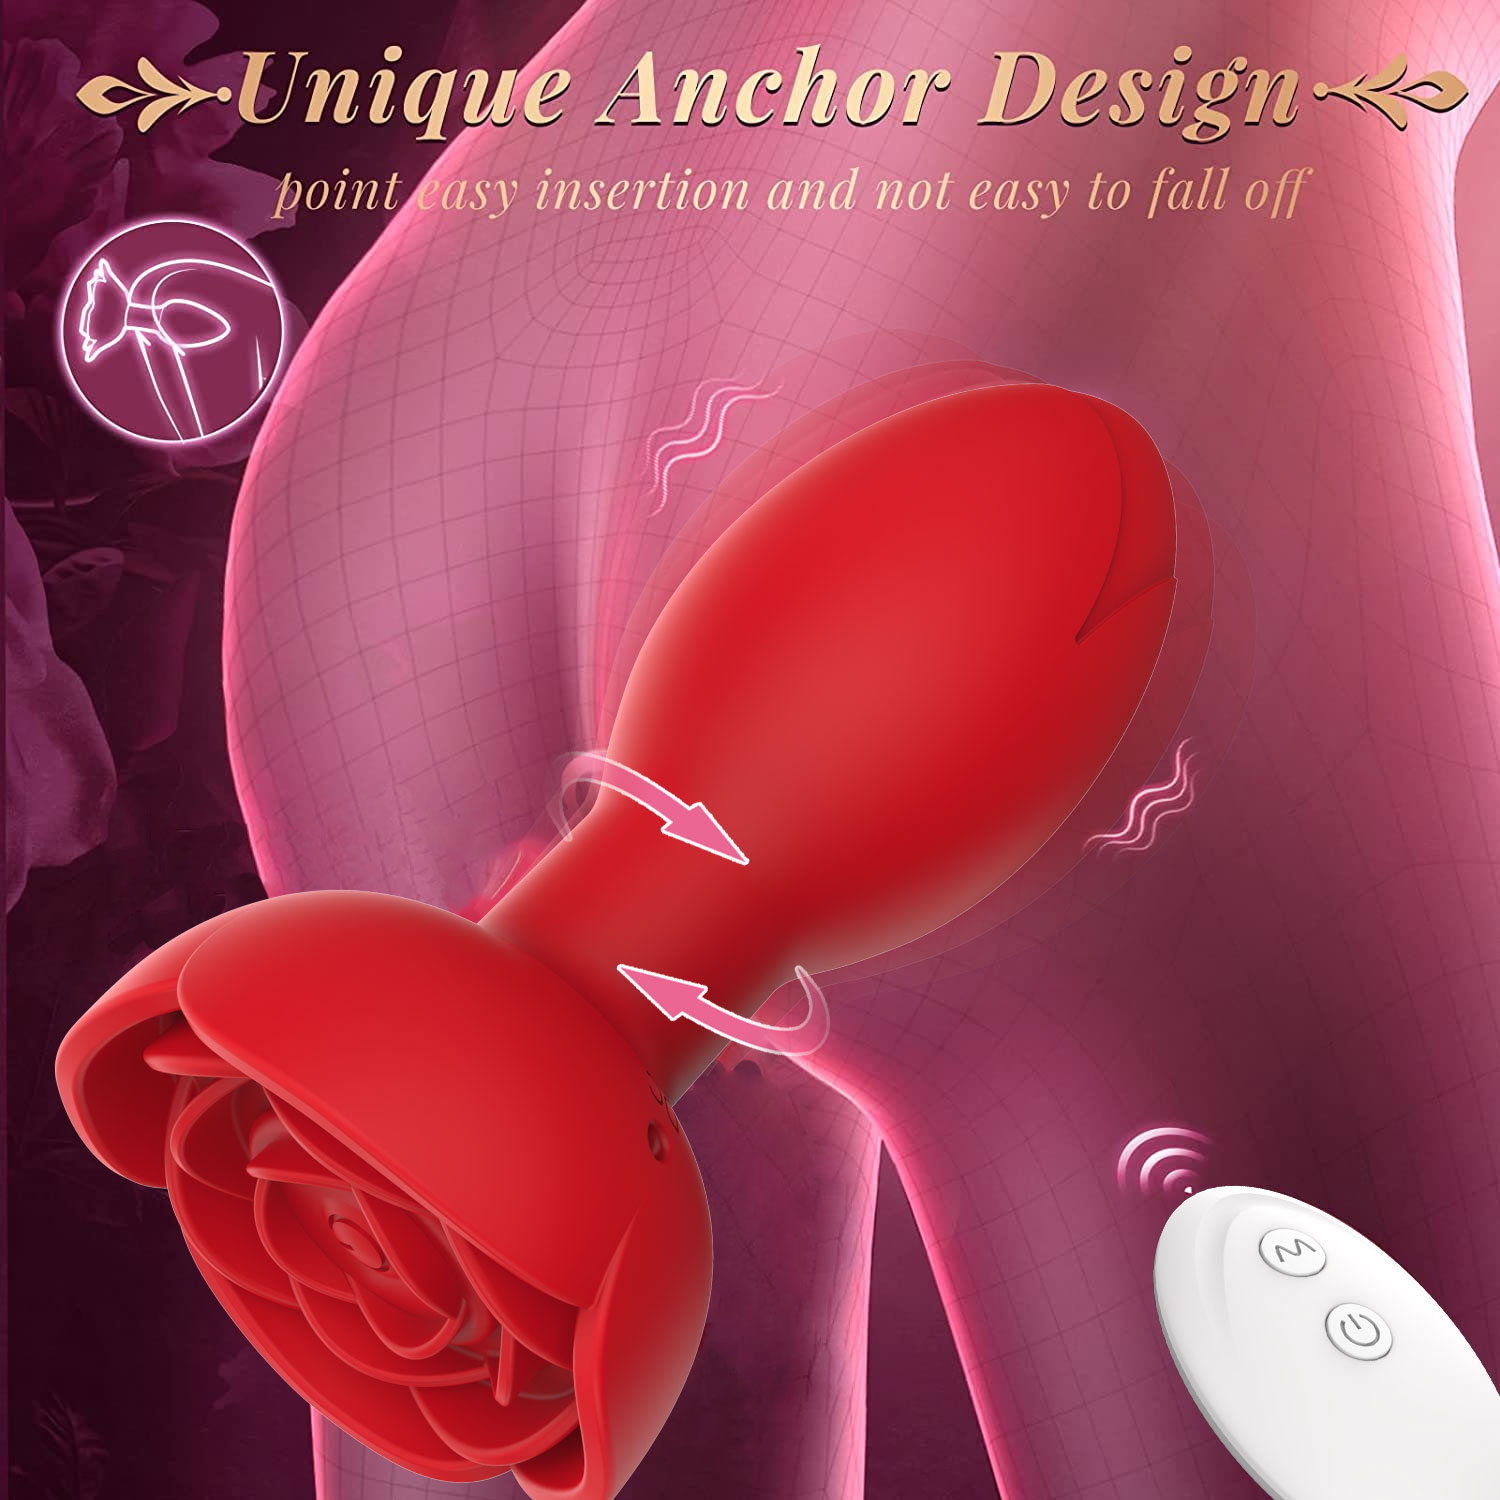 7.Red-Thrusting Anal Vibrator Prostate Massager